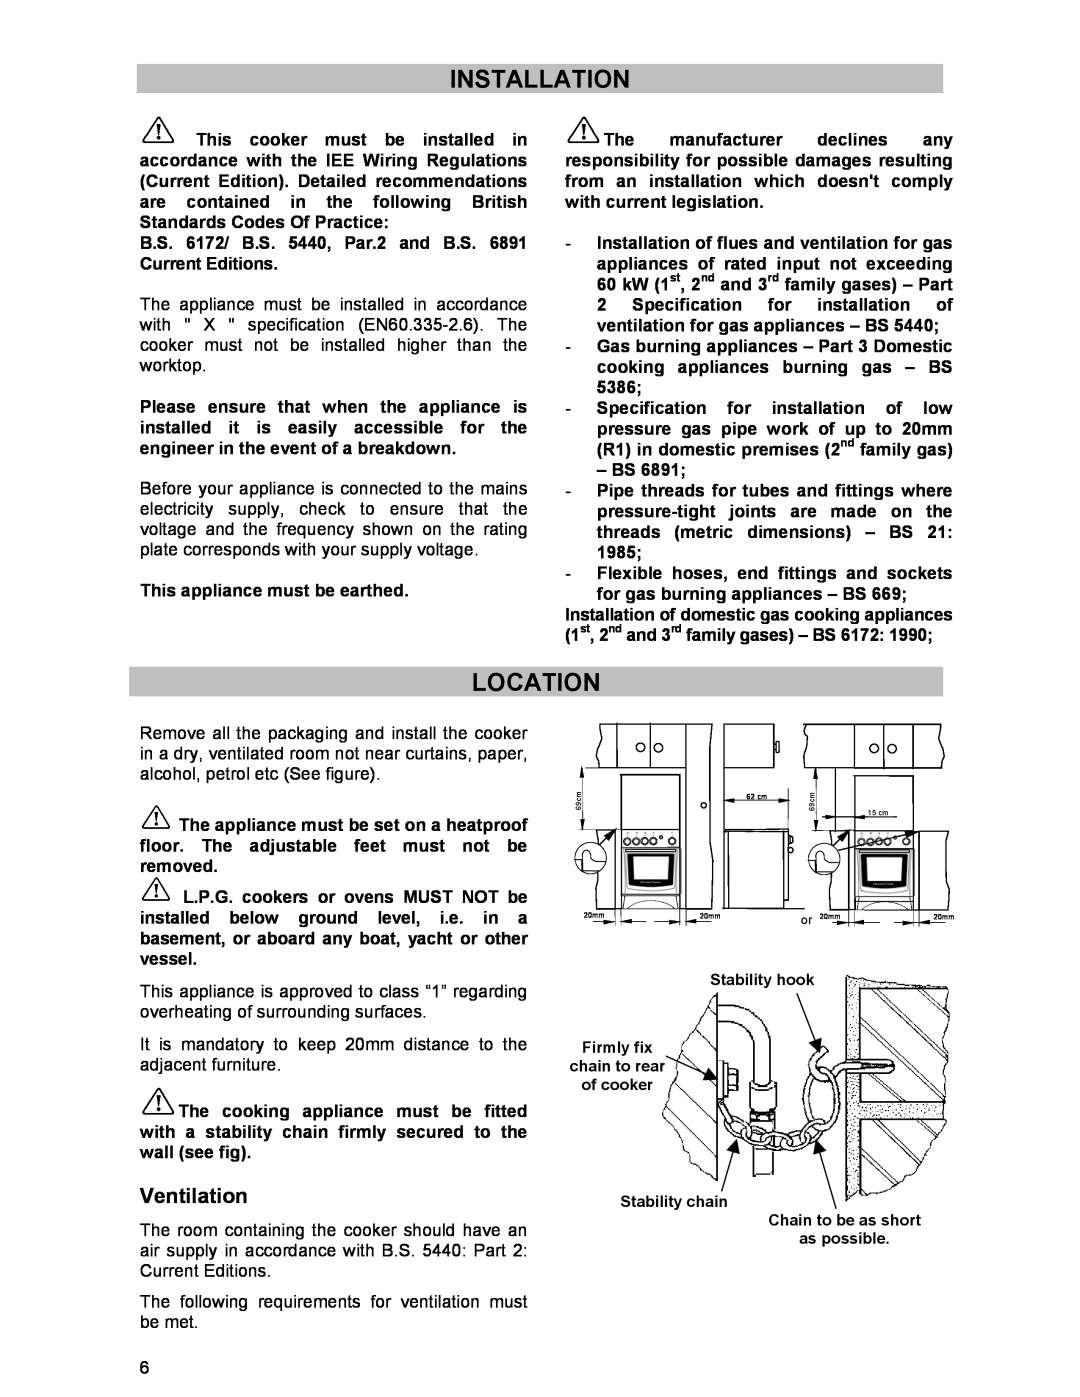 Electrolux DSO51DF manual Installation, Location, Ventilation 